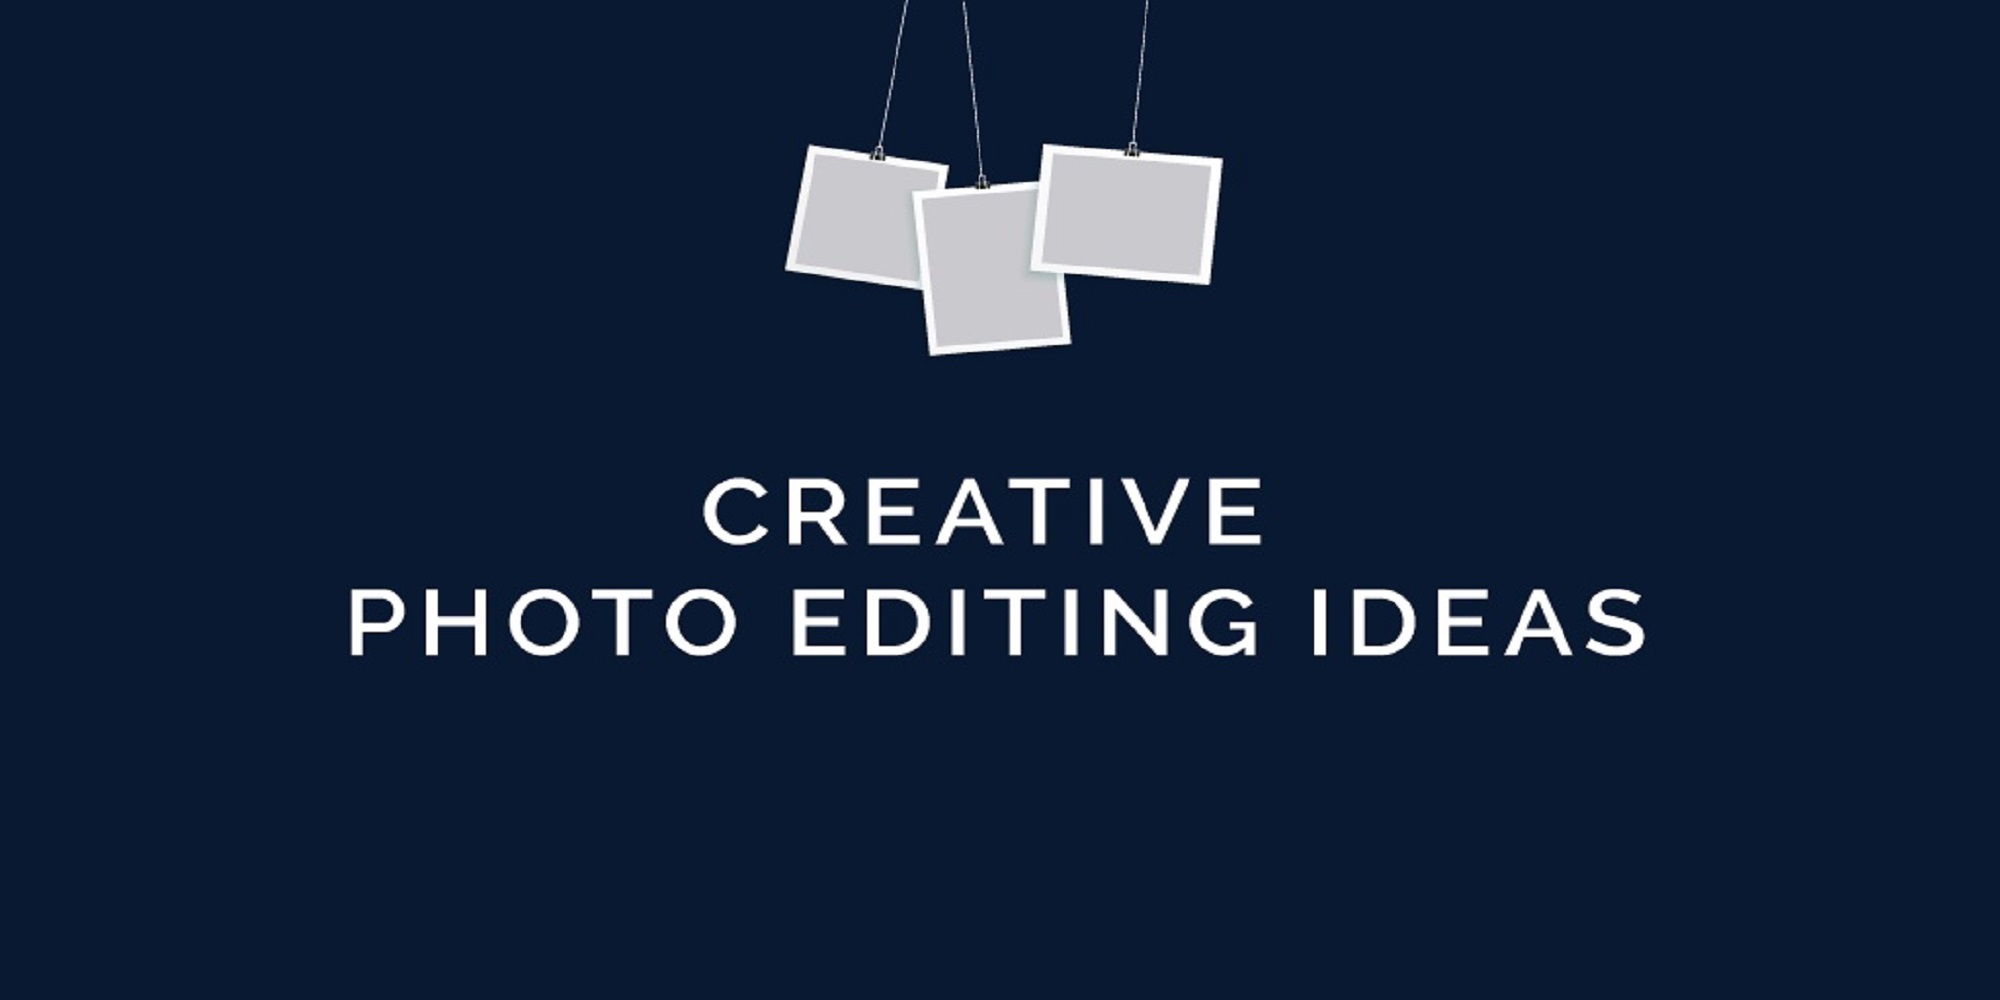 Creative Photo Editing Ideas